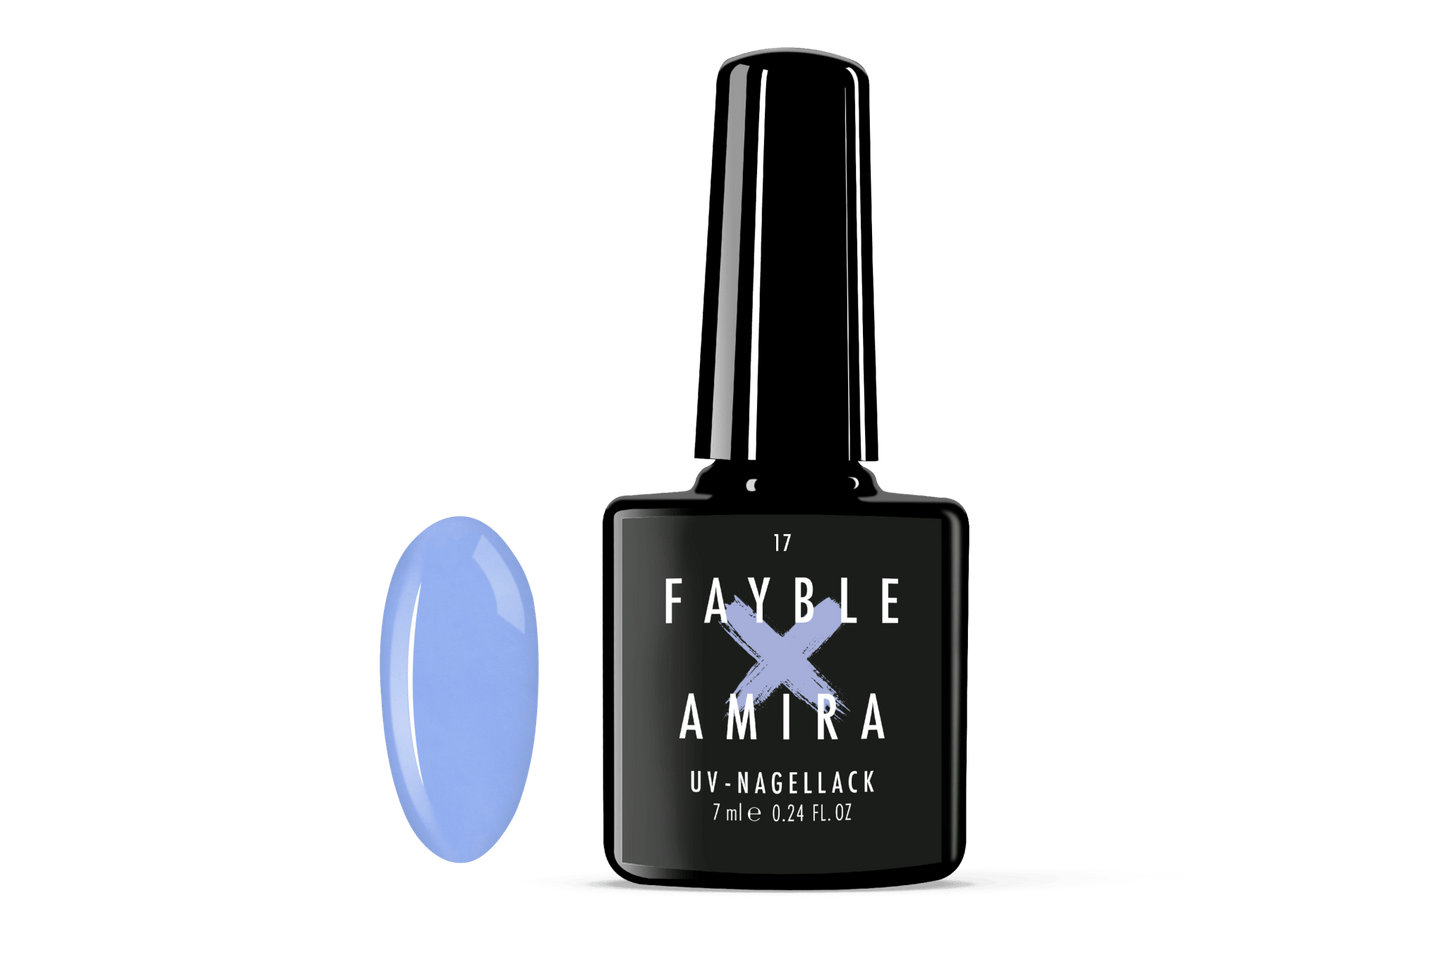 FAYBLE × AMIRA | UV-Nagellack 17 - FAYBLE